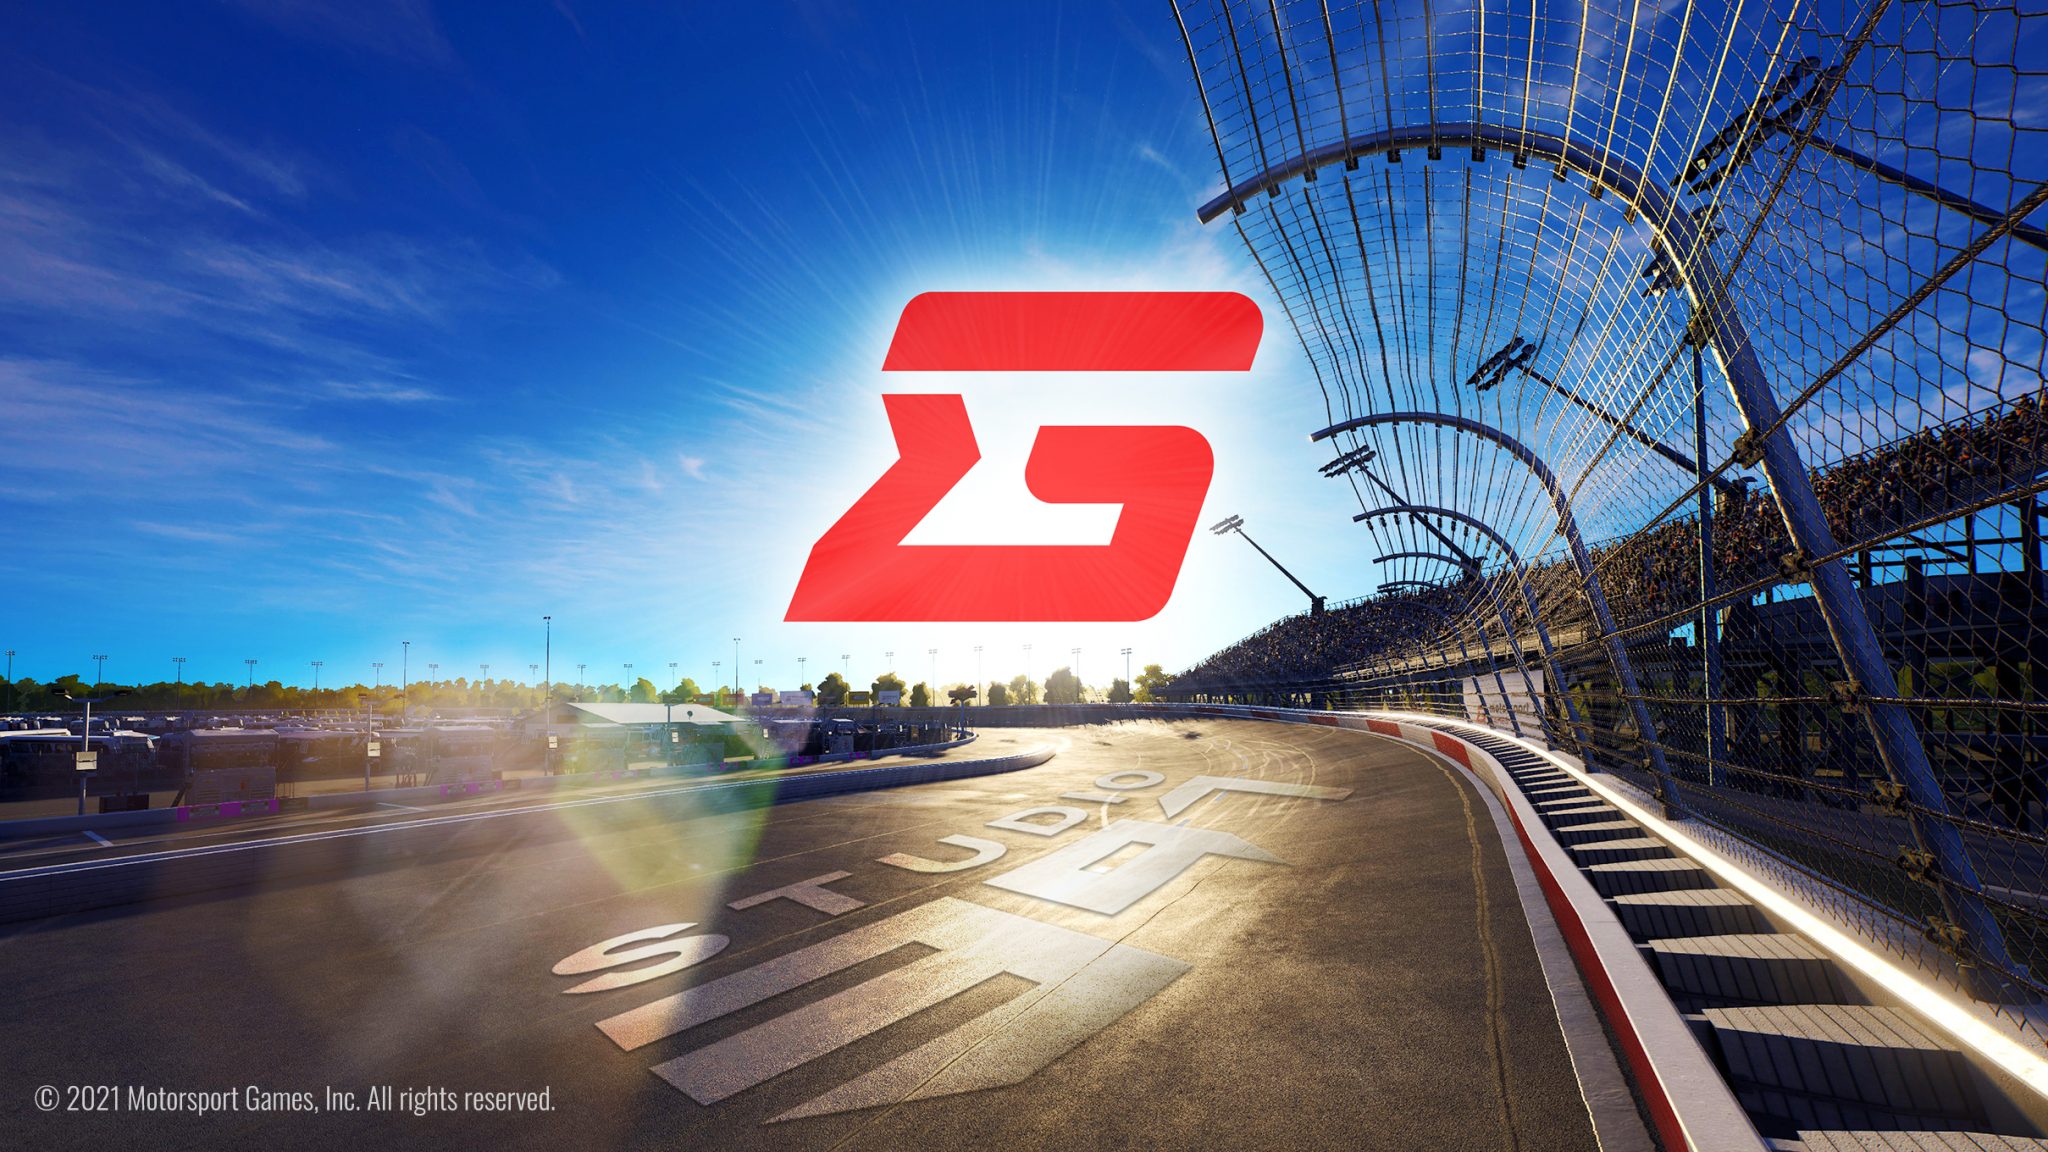 More information about "Motorsport Games completa l'acquisizione di Studio 397 (rFactor 2)"